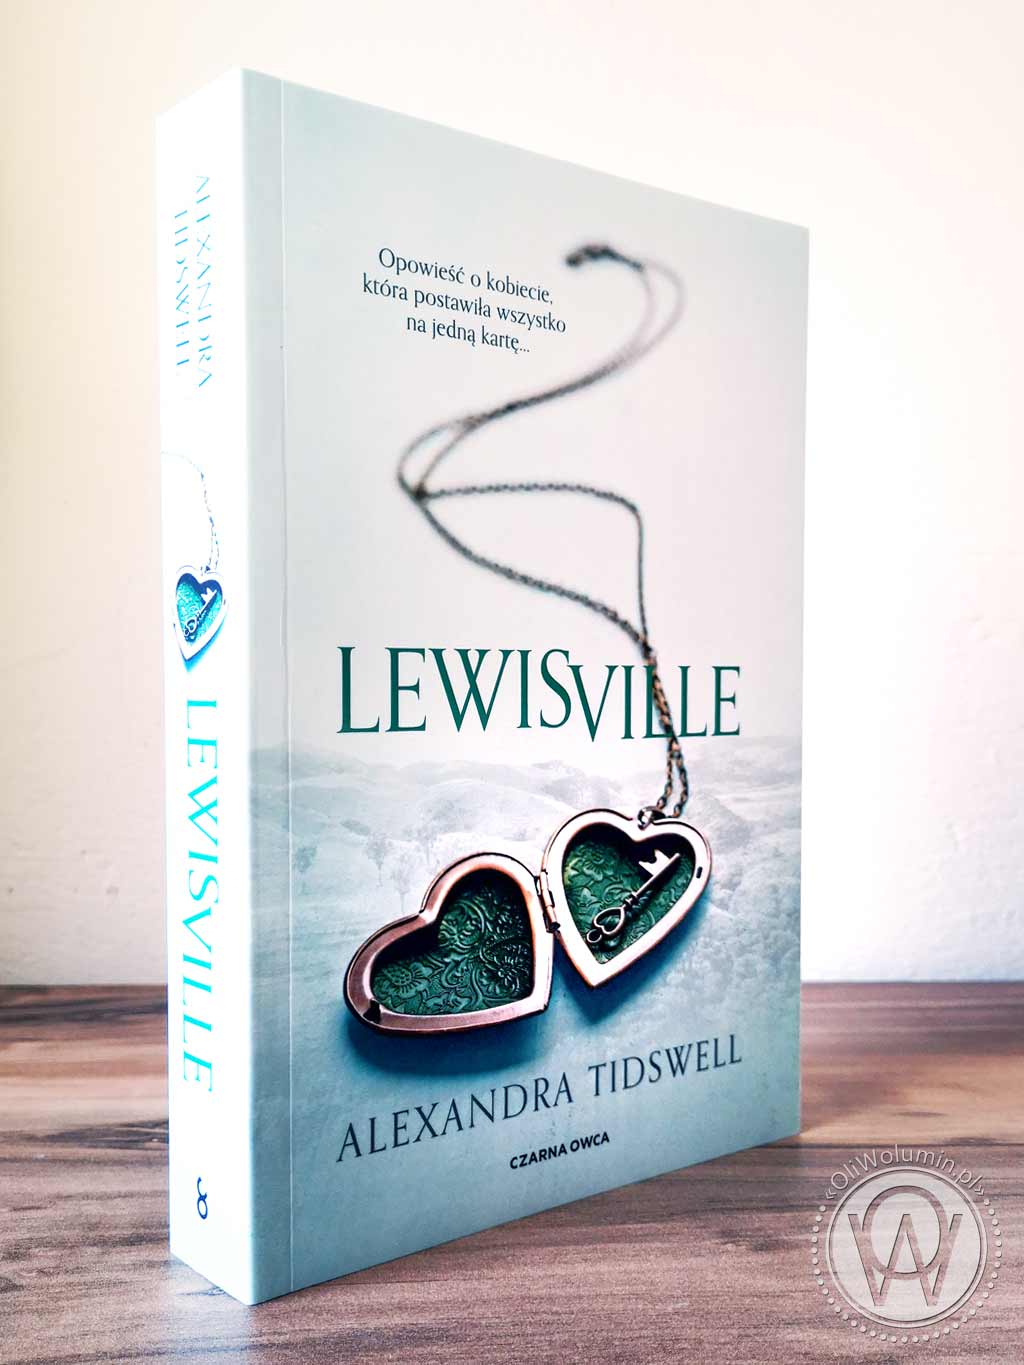 Alexandra Tidswell "Lewisville"